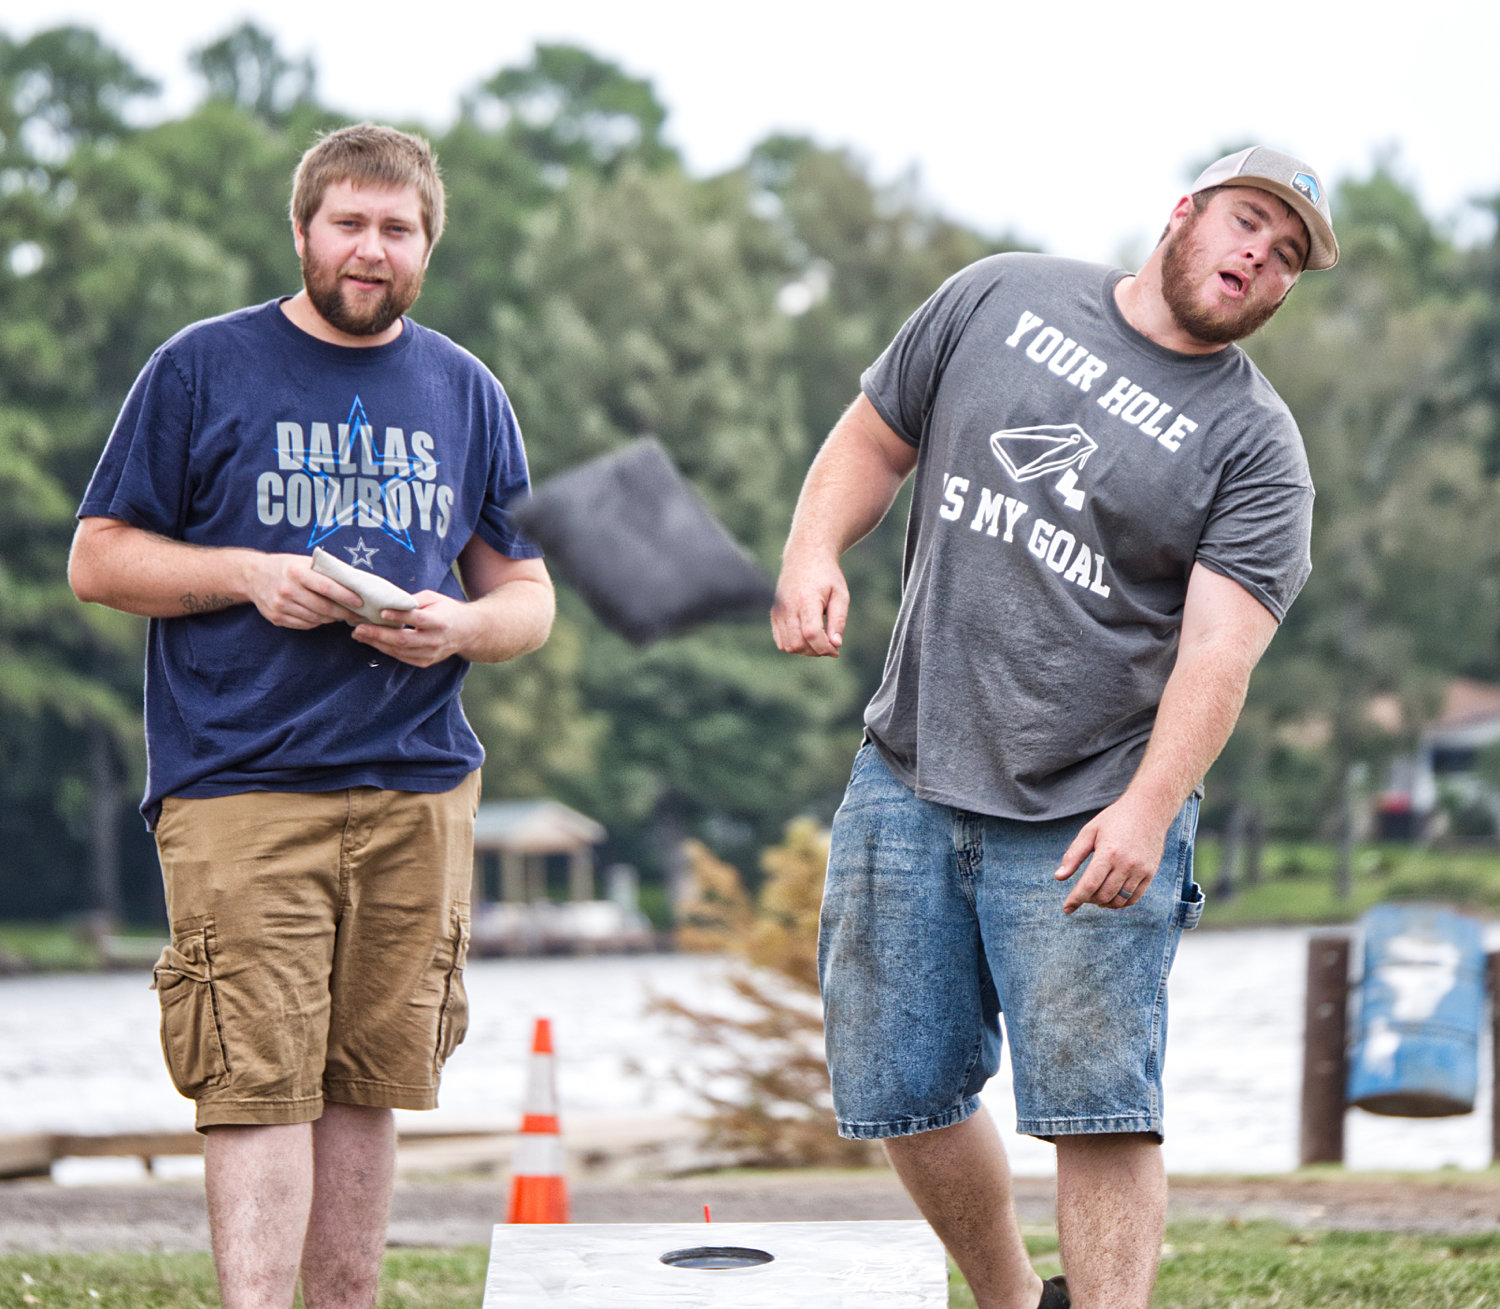 Competing in the cornhole tournament are Eric Baker, left, and Garrett Driskill.